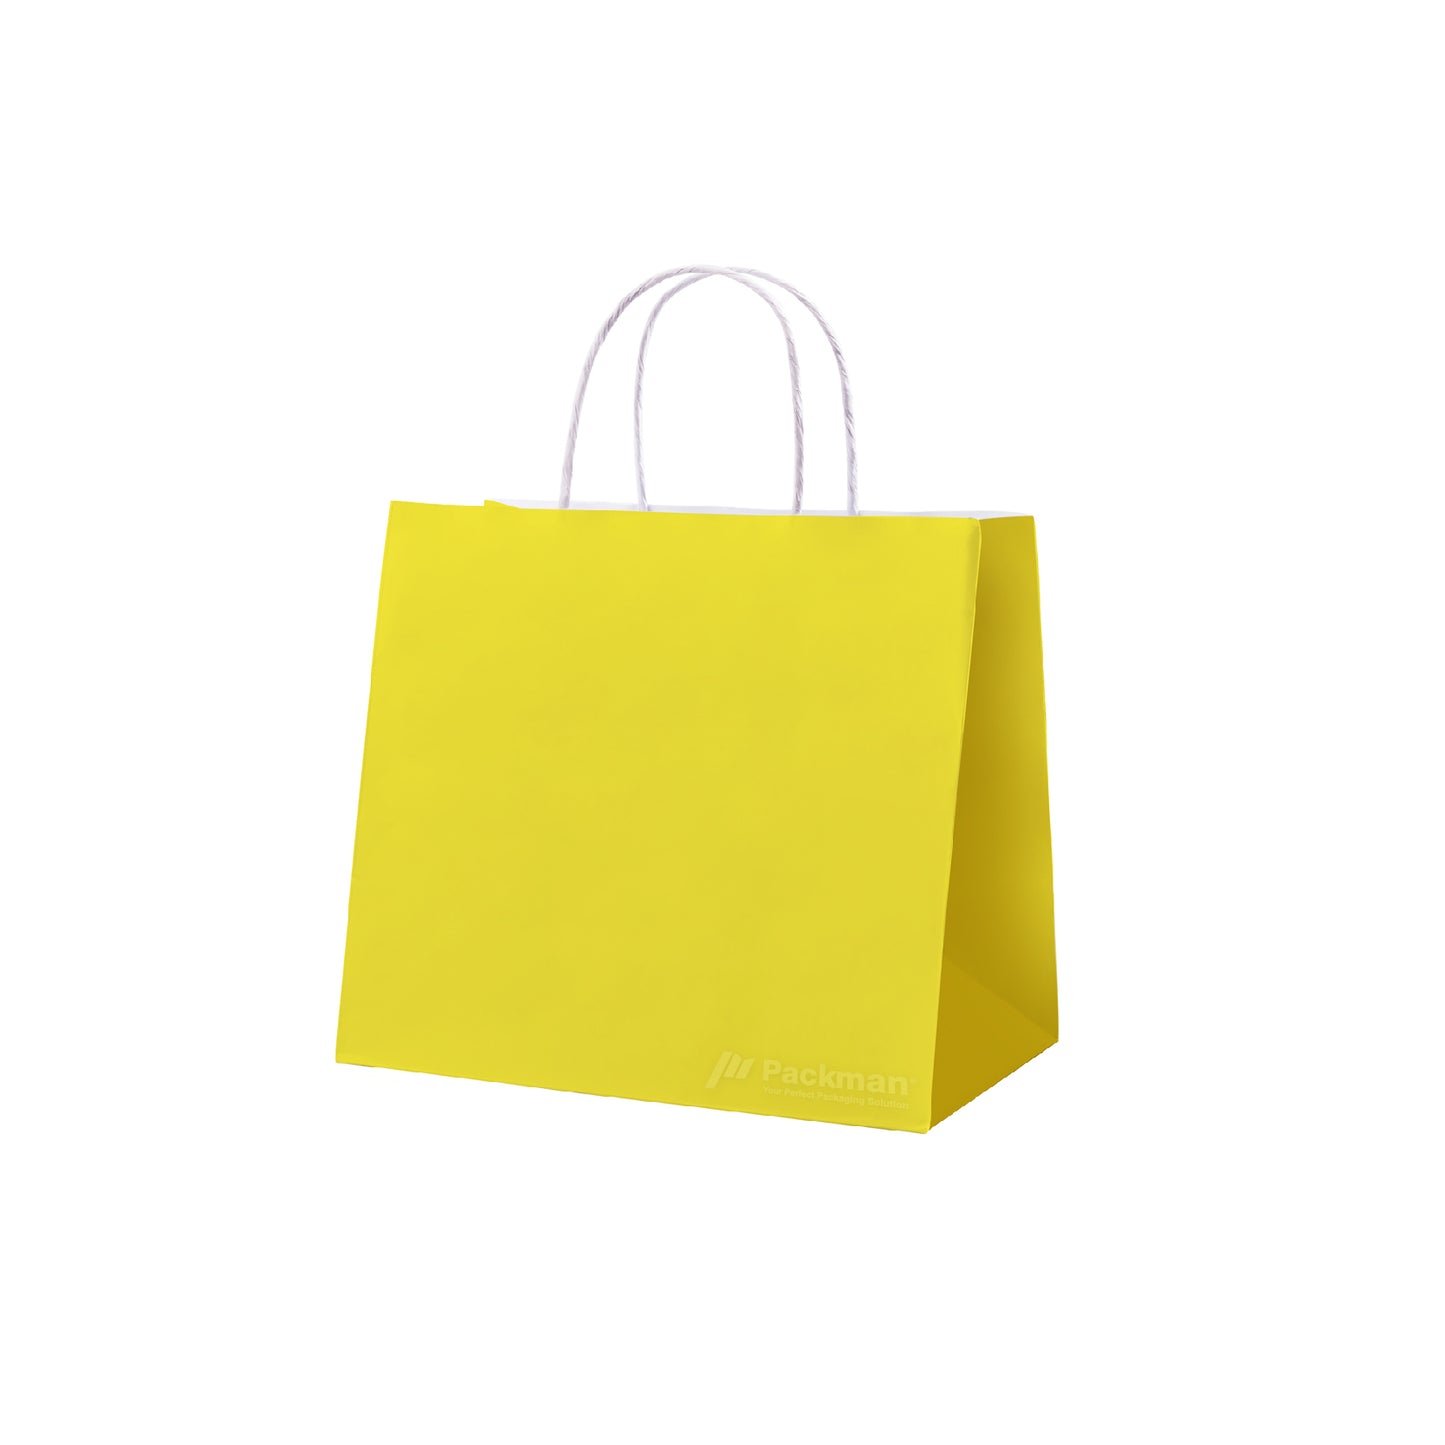 32 x 11 x 25cm Yellow Paper Bag (100pcs)